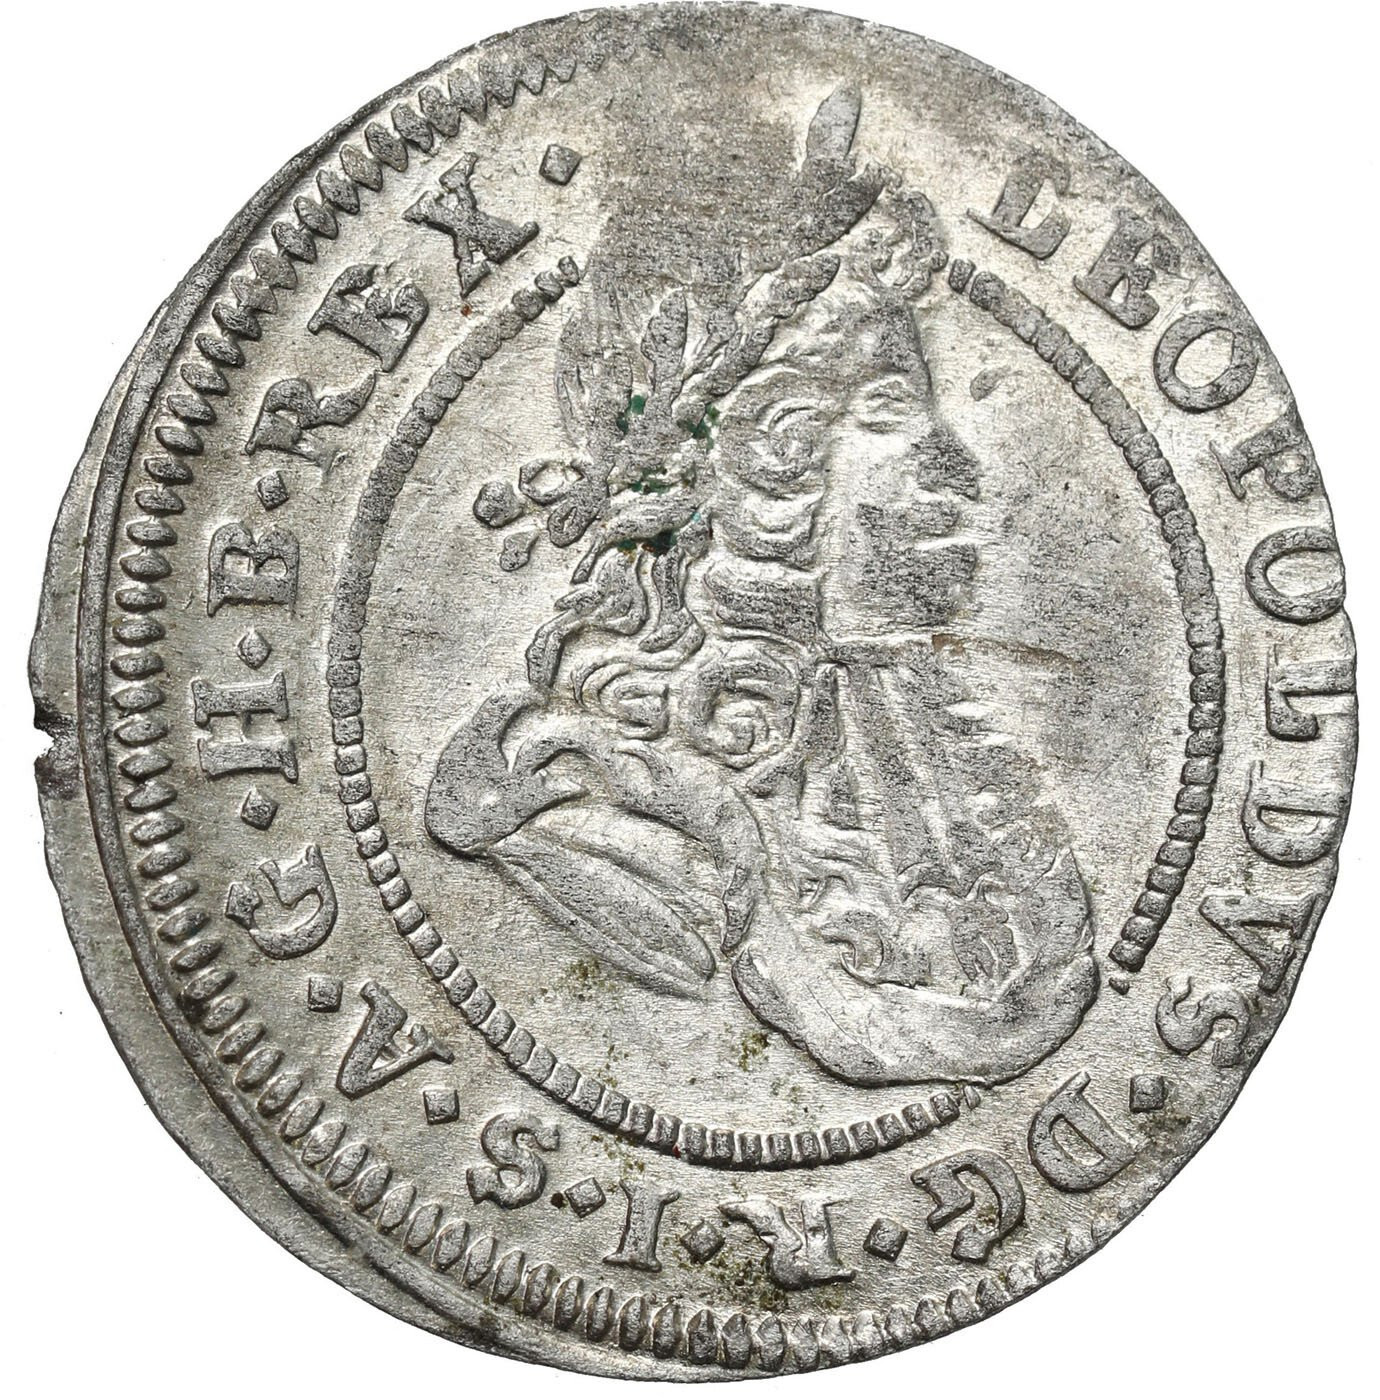 Śląsk, Leopold I, 1 krajcar 1699 FN, Opole